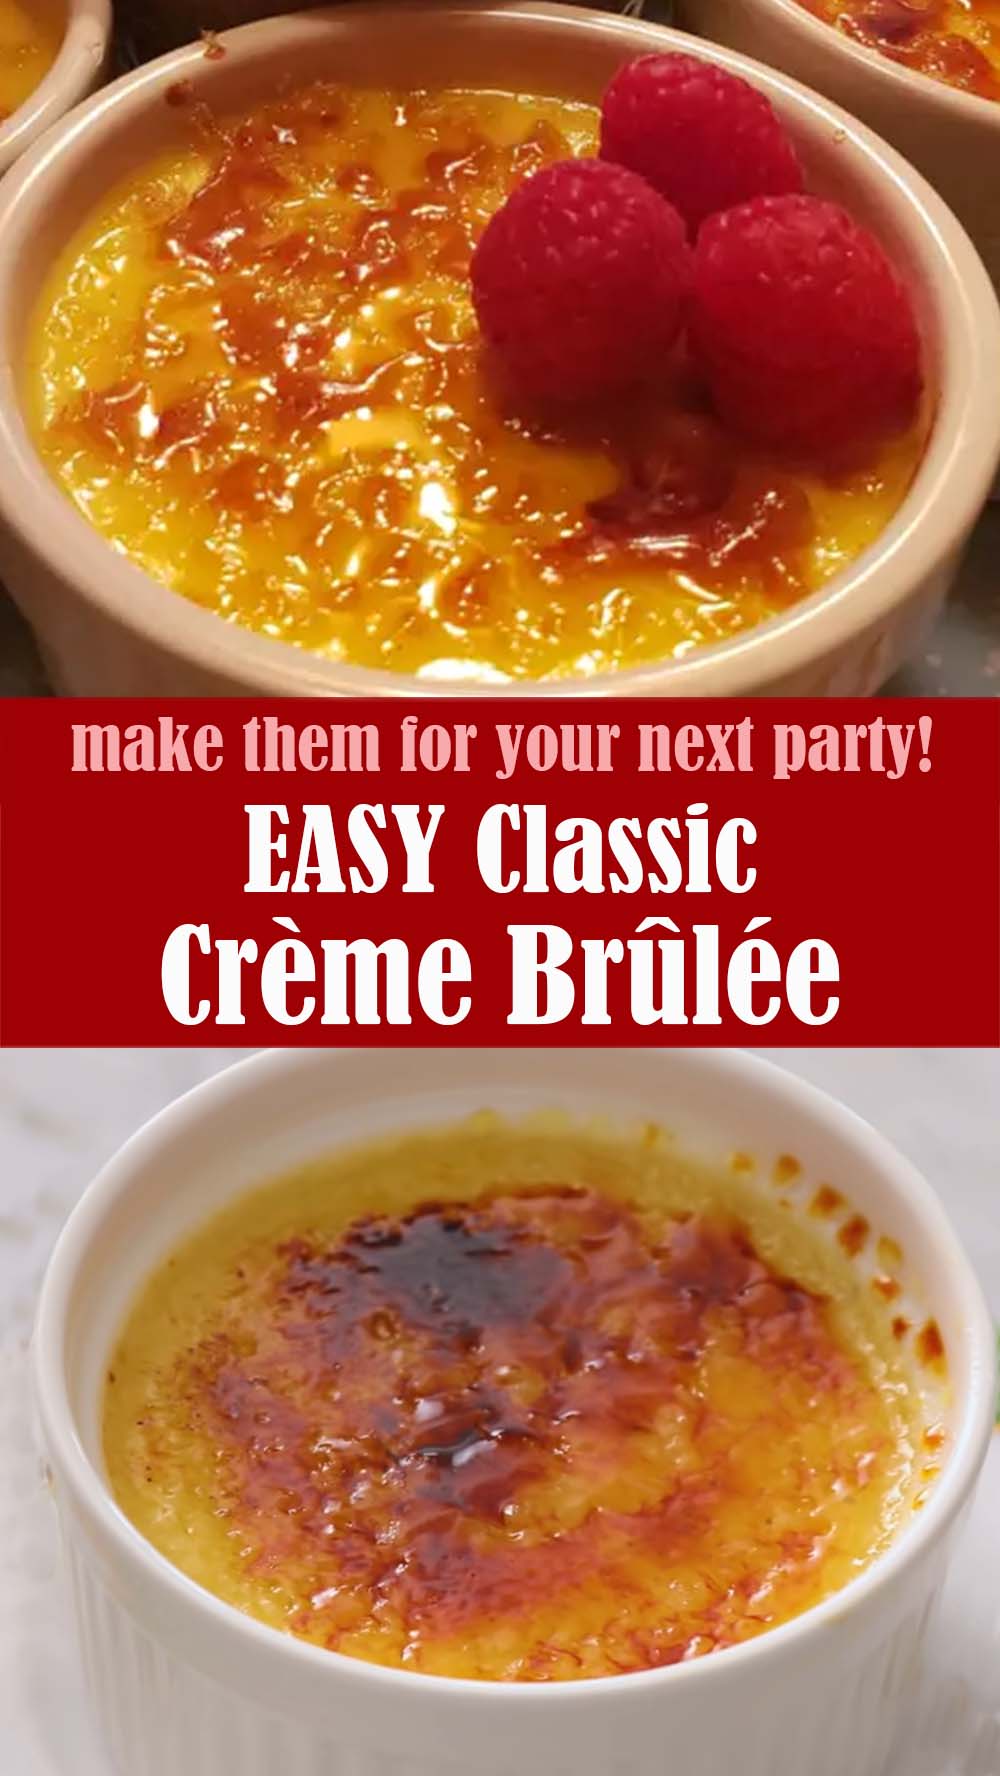 EASY Classic Creme Brulee Recipe